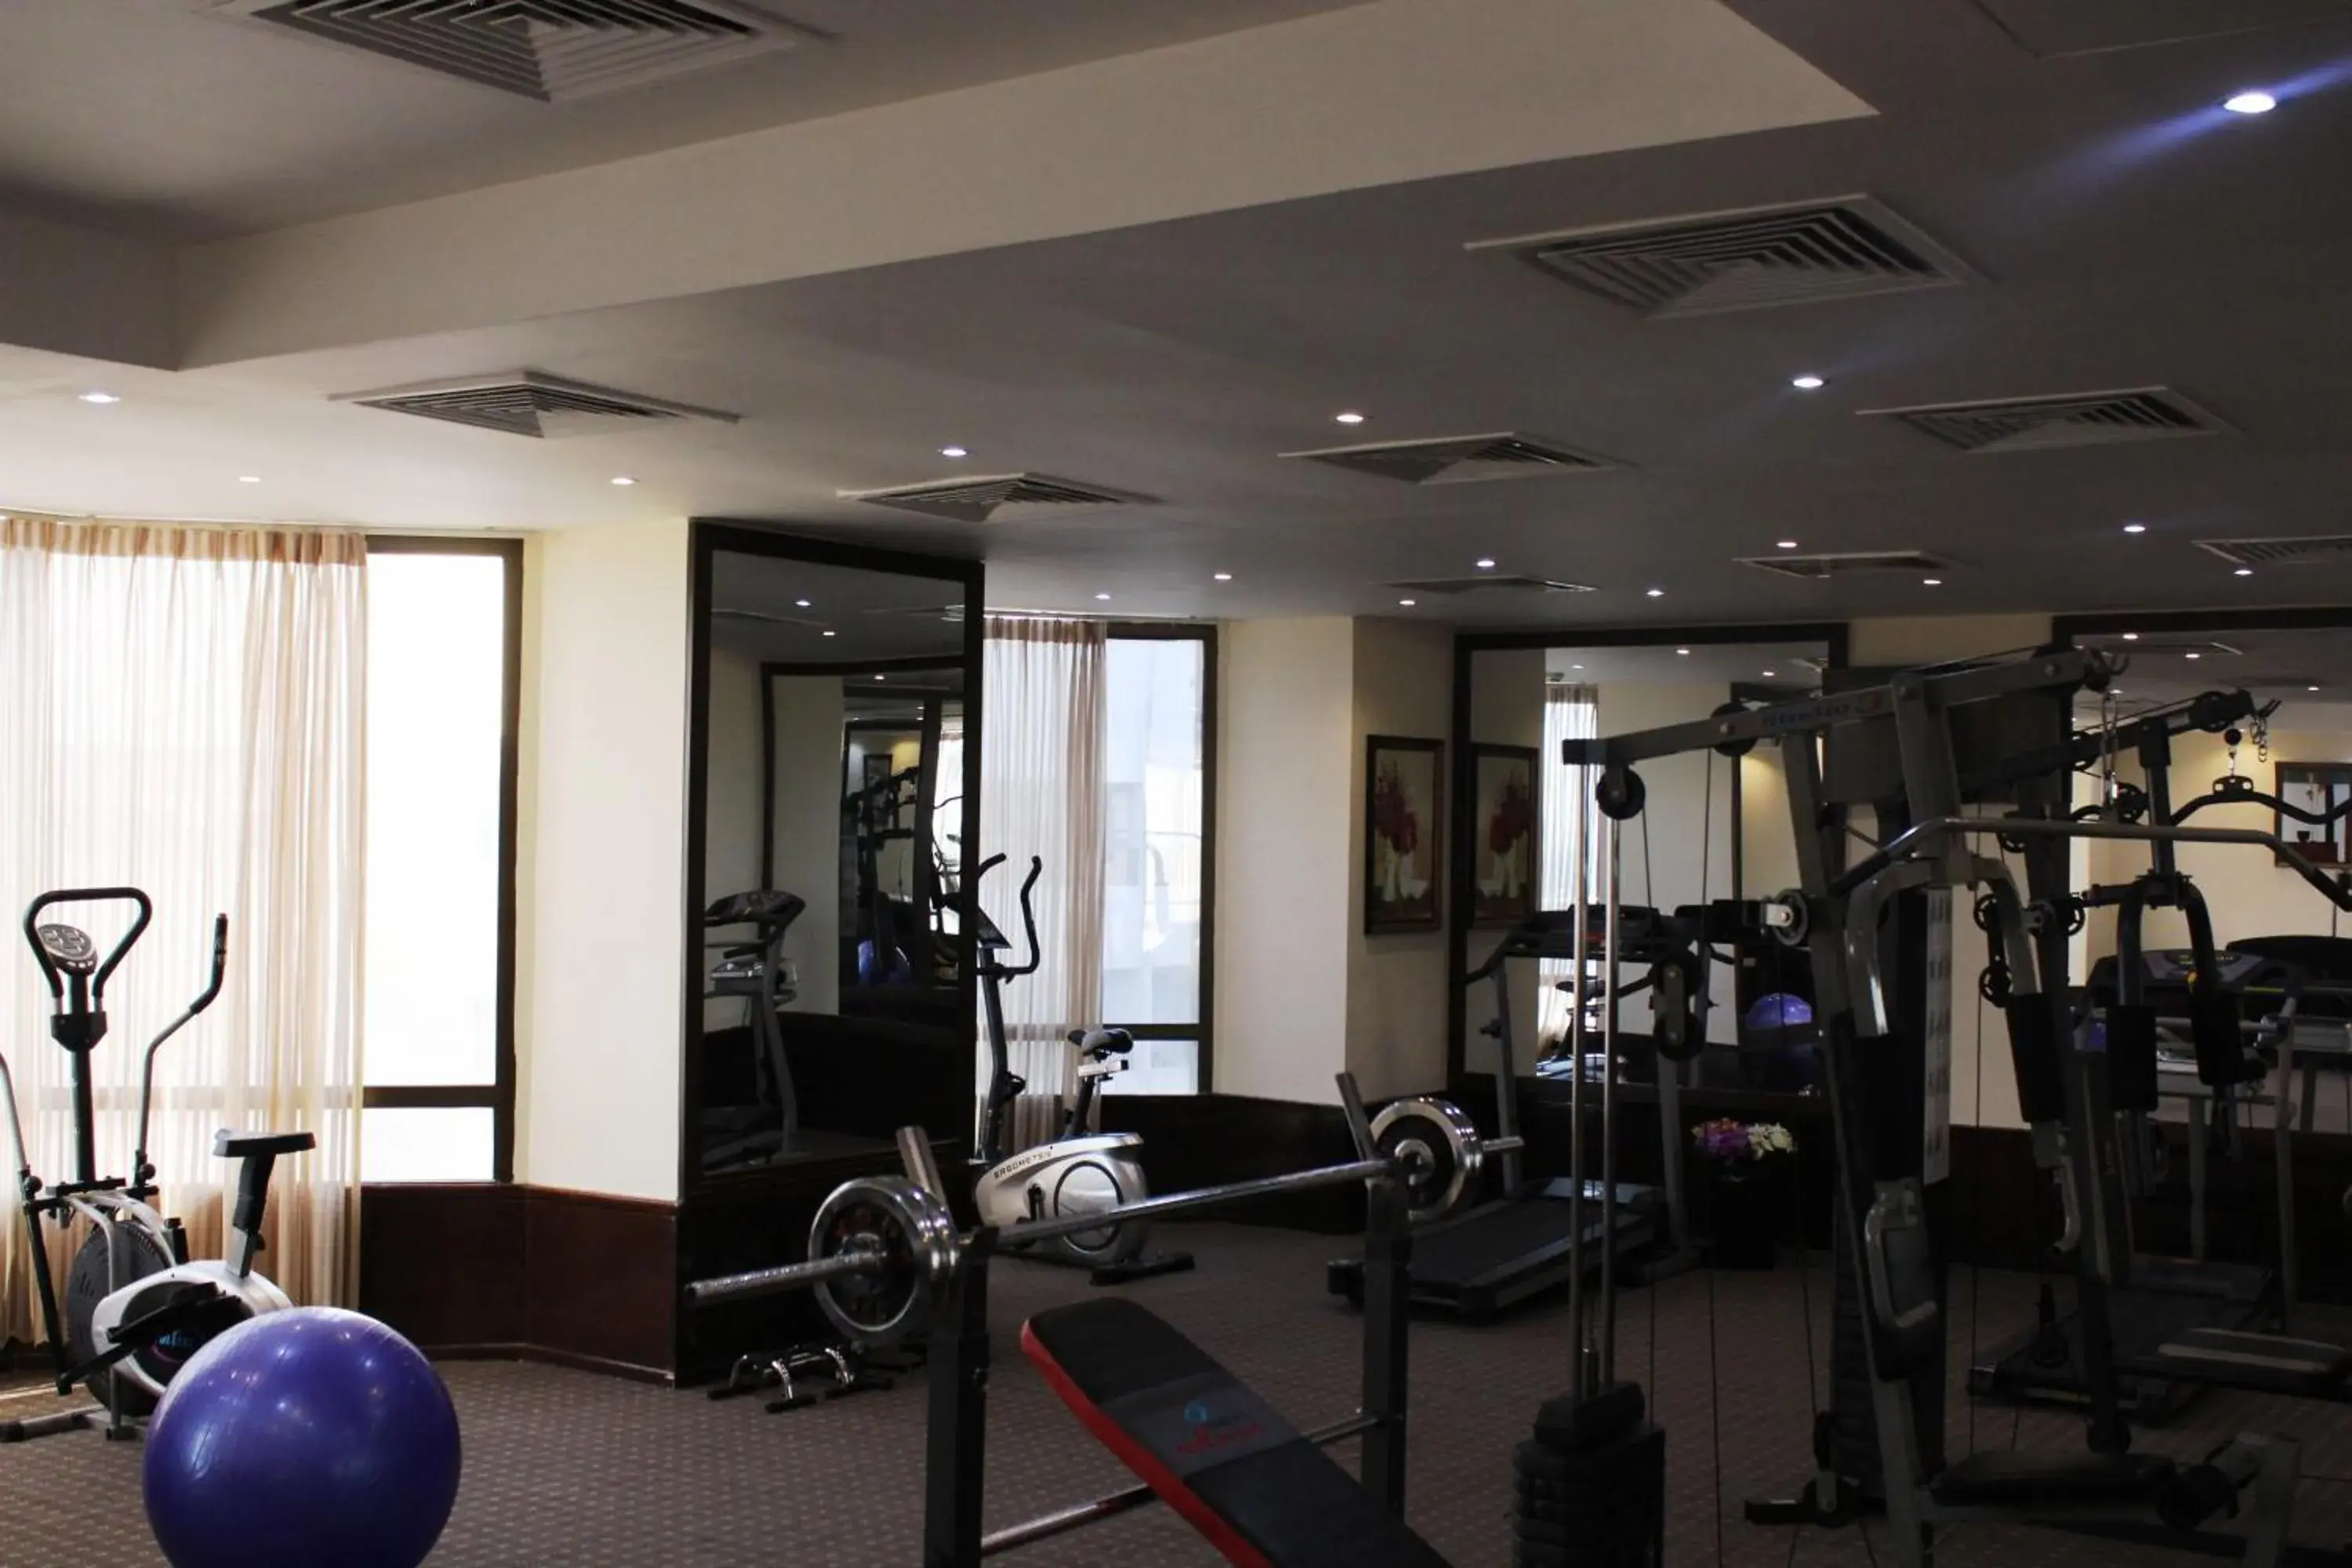 Fitness centre/facilities, Fitness Center/Facilities in Al Khaleej Grand Hotel